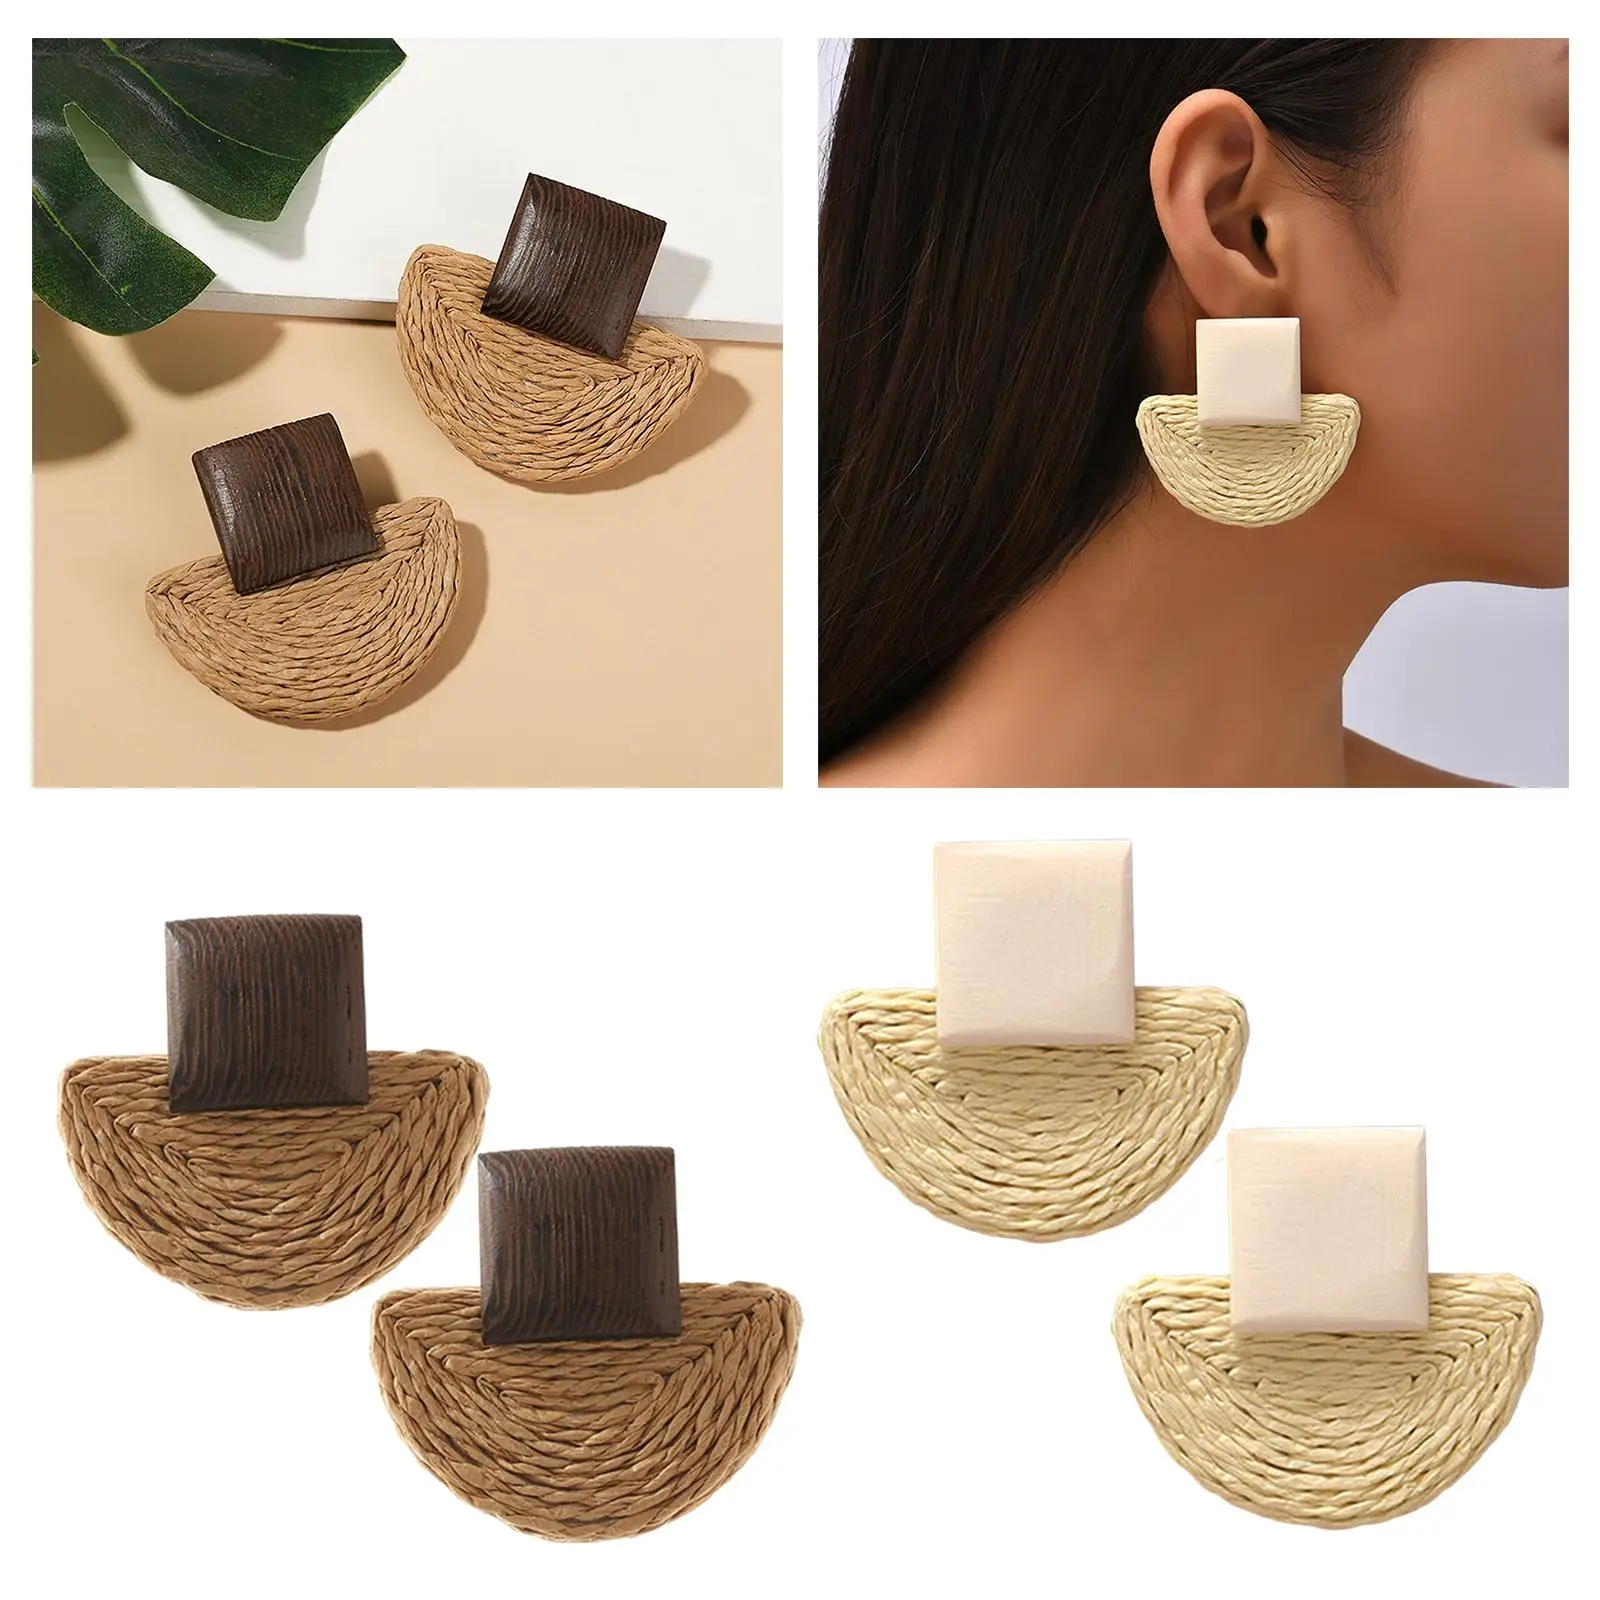 Rattan Dangle Earrings, Boho Vintage Braid Lightweight Gifts Handmade Jewelry Hoop Earrings, for  Holidays Beach  Mother